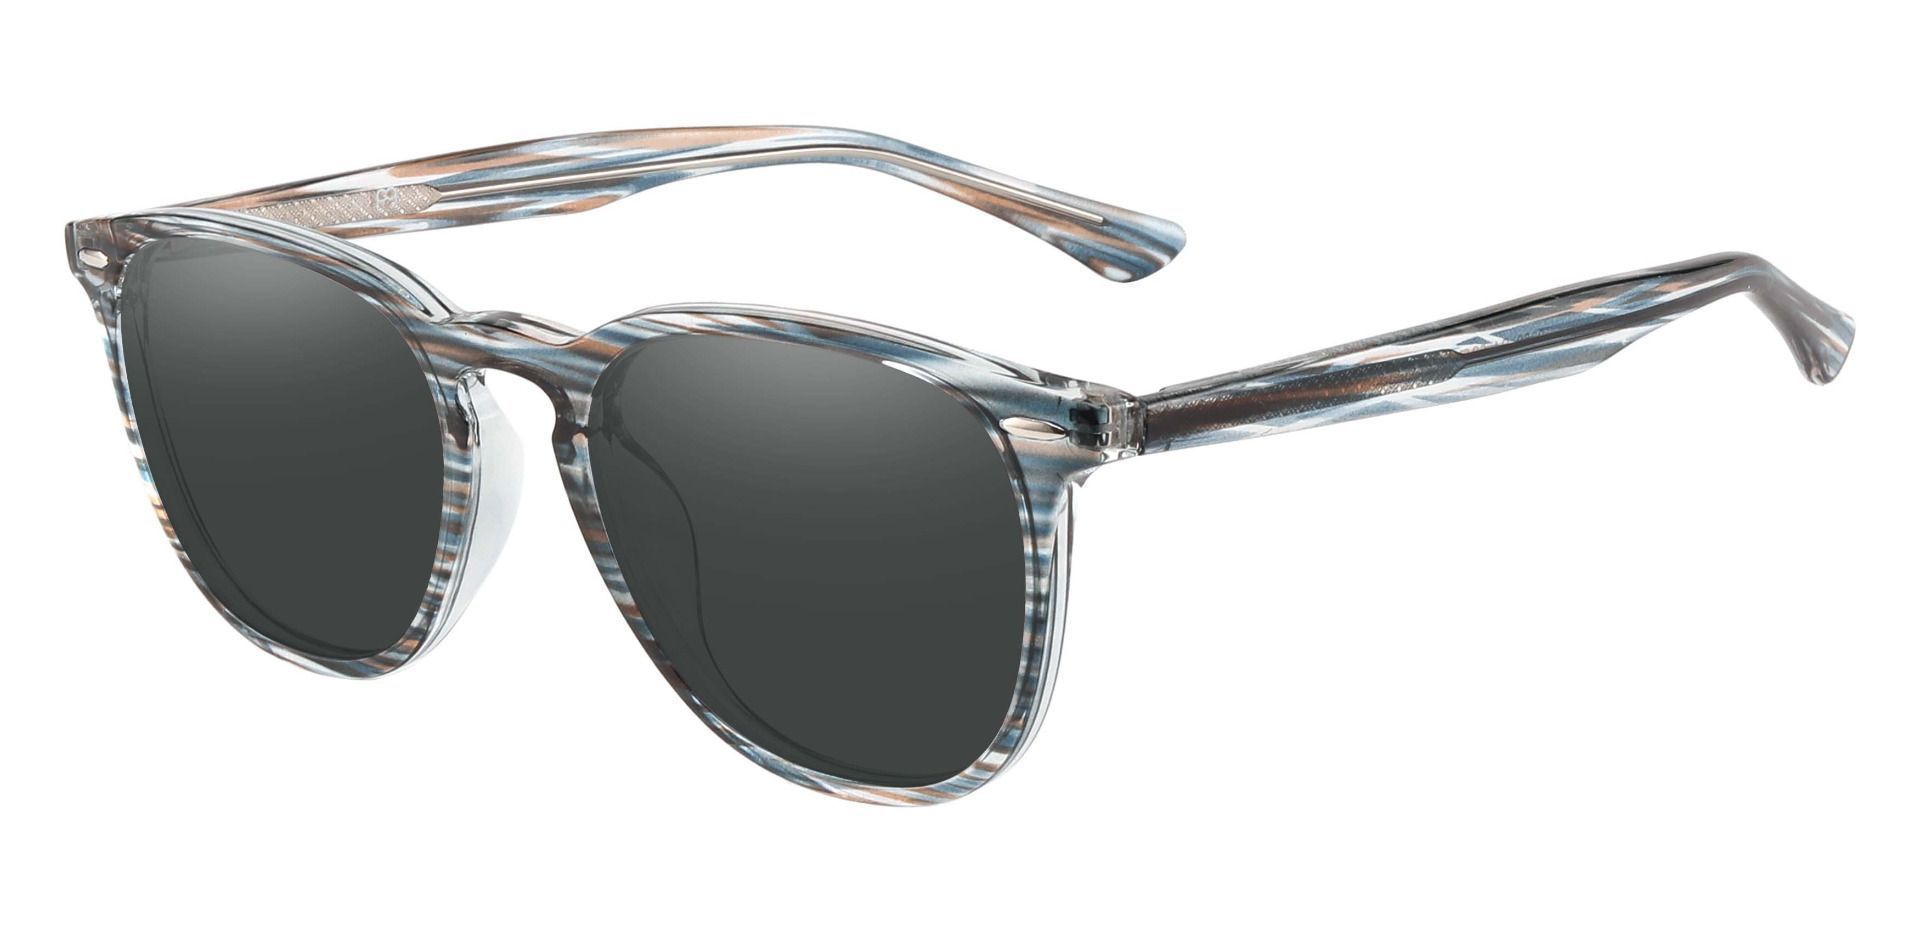 Sycamore Oval Progressive Sunglasses - Blue Frame With Gray Lenses